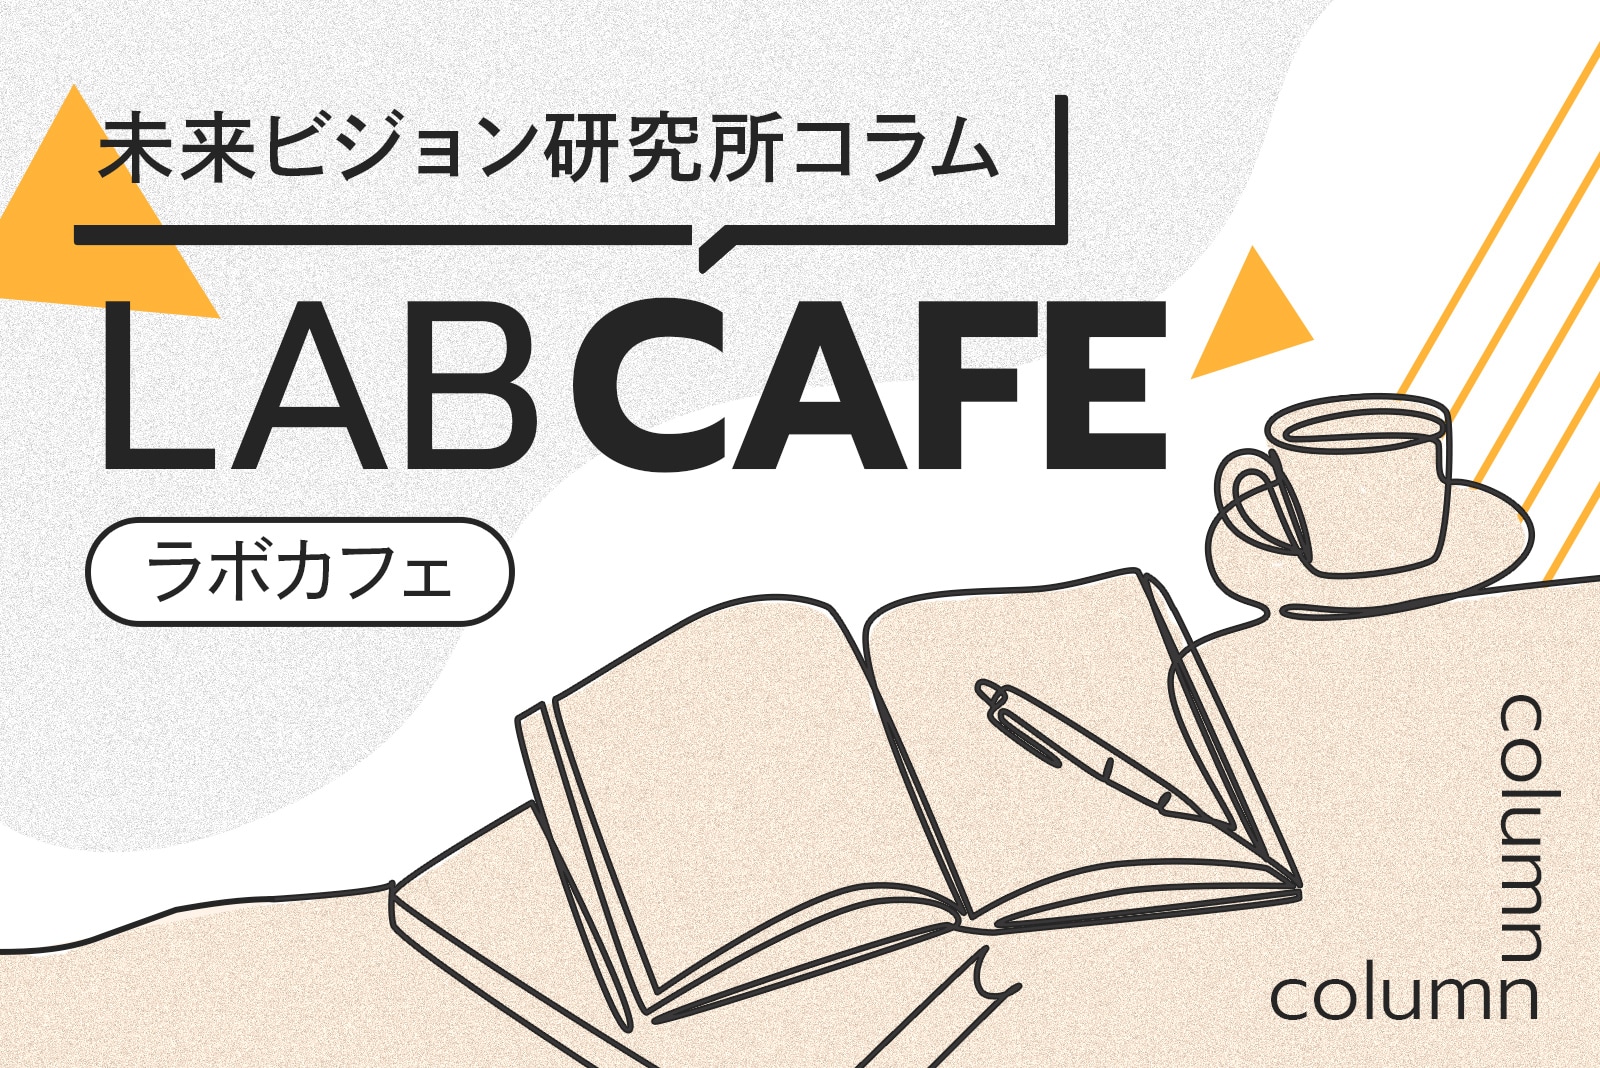 LAB CAFE【NEW】生島ヒロシさん新刊出版 !!